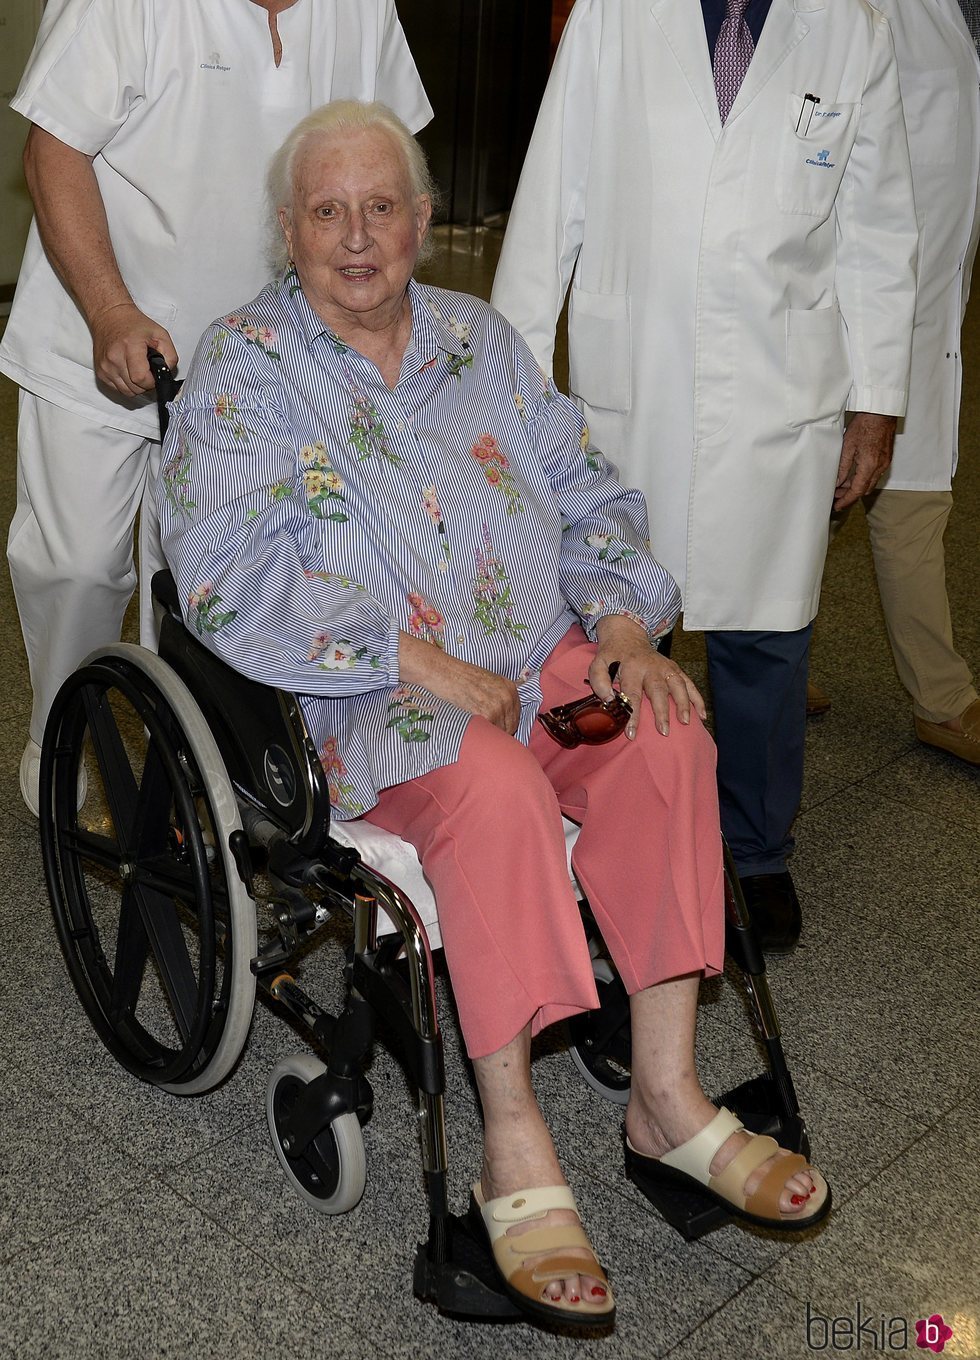 La Infanta Pilar tras recibir el alta hospitalaria en Palma